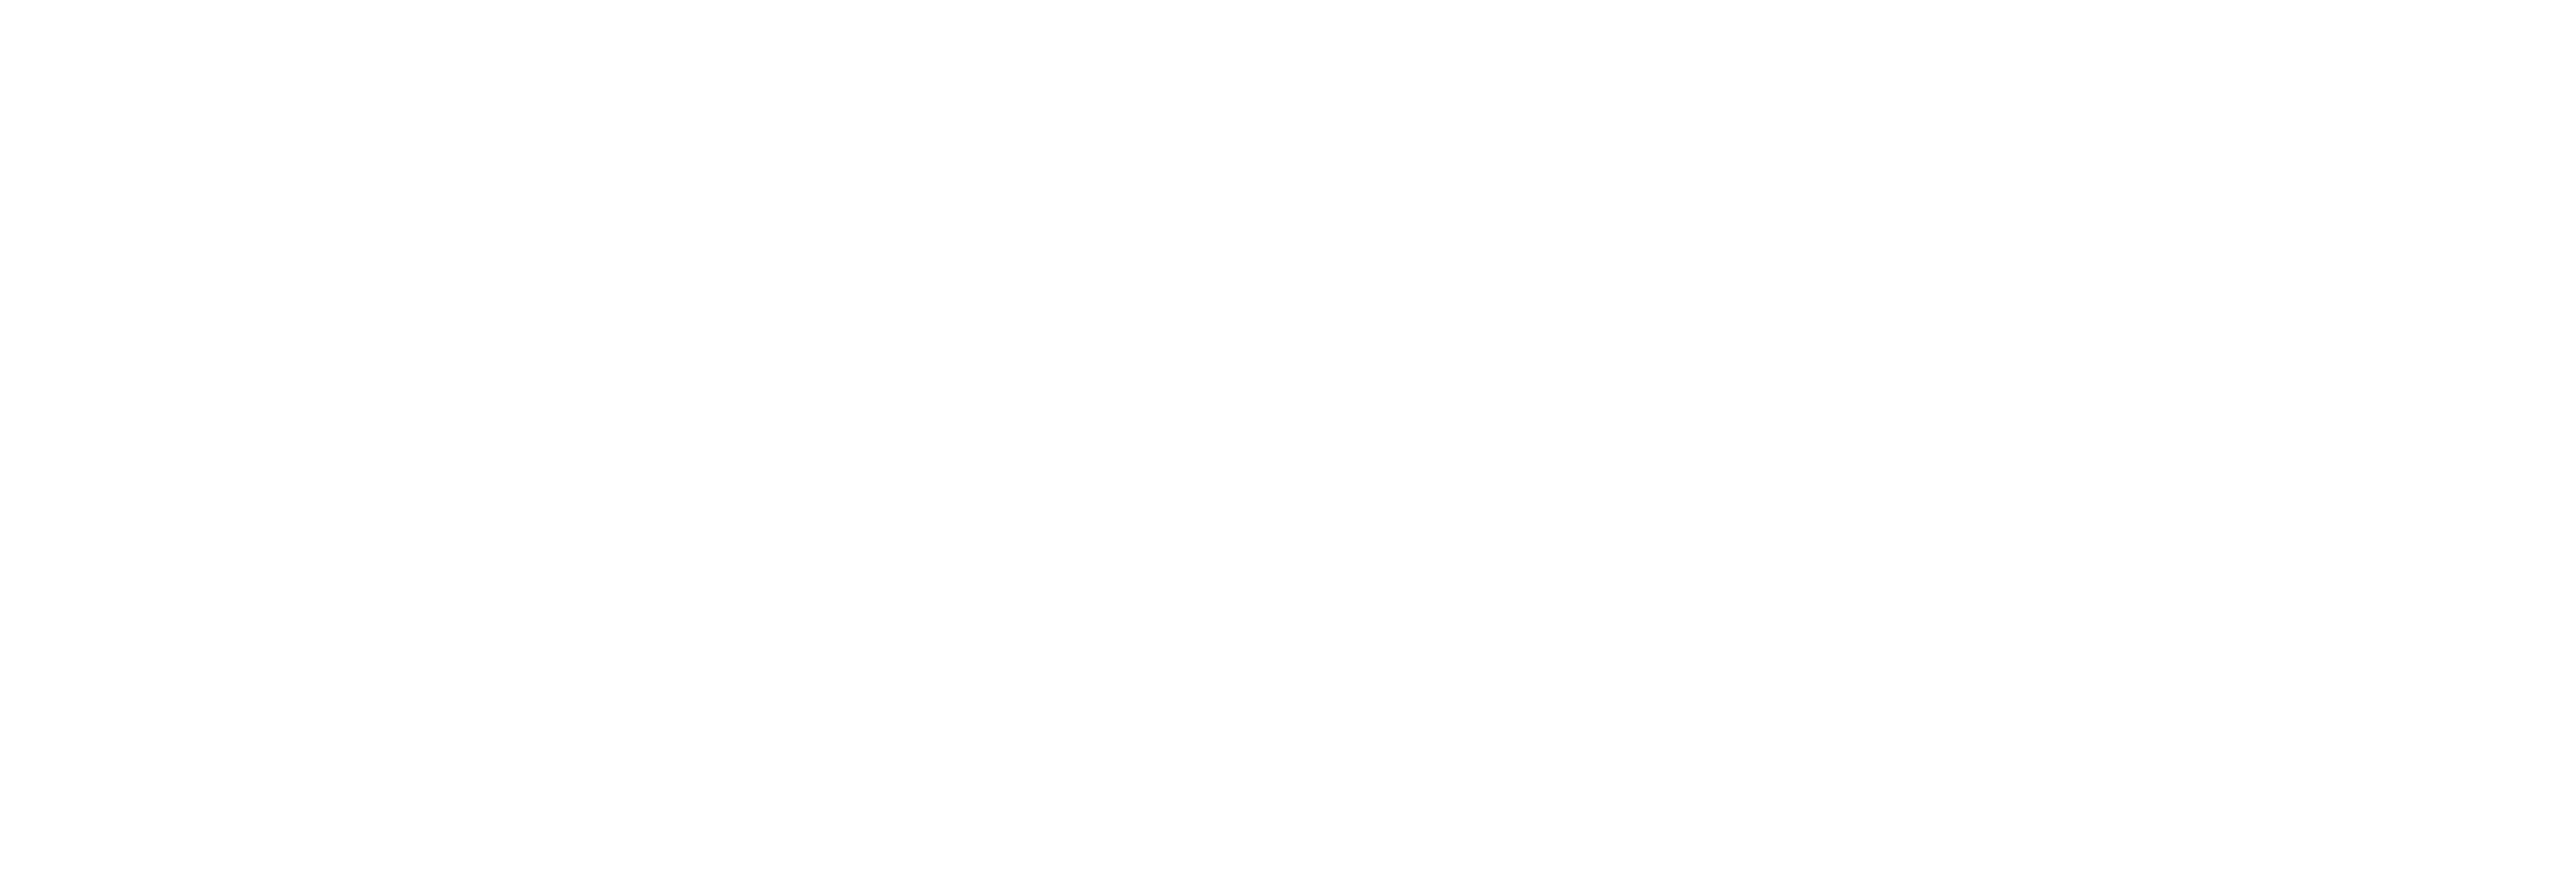 Cevin Fisher Logo